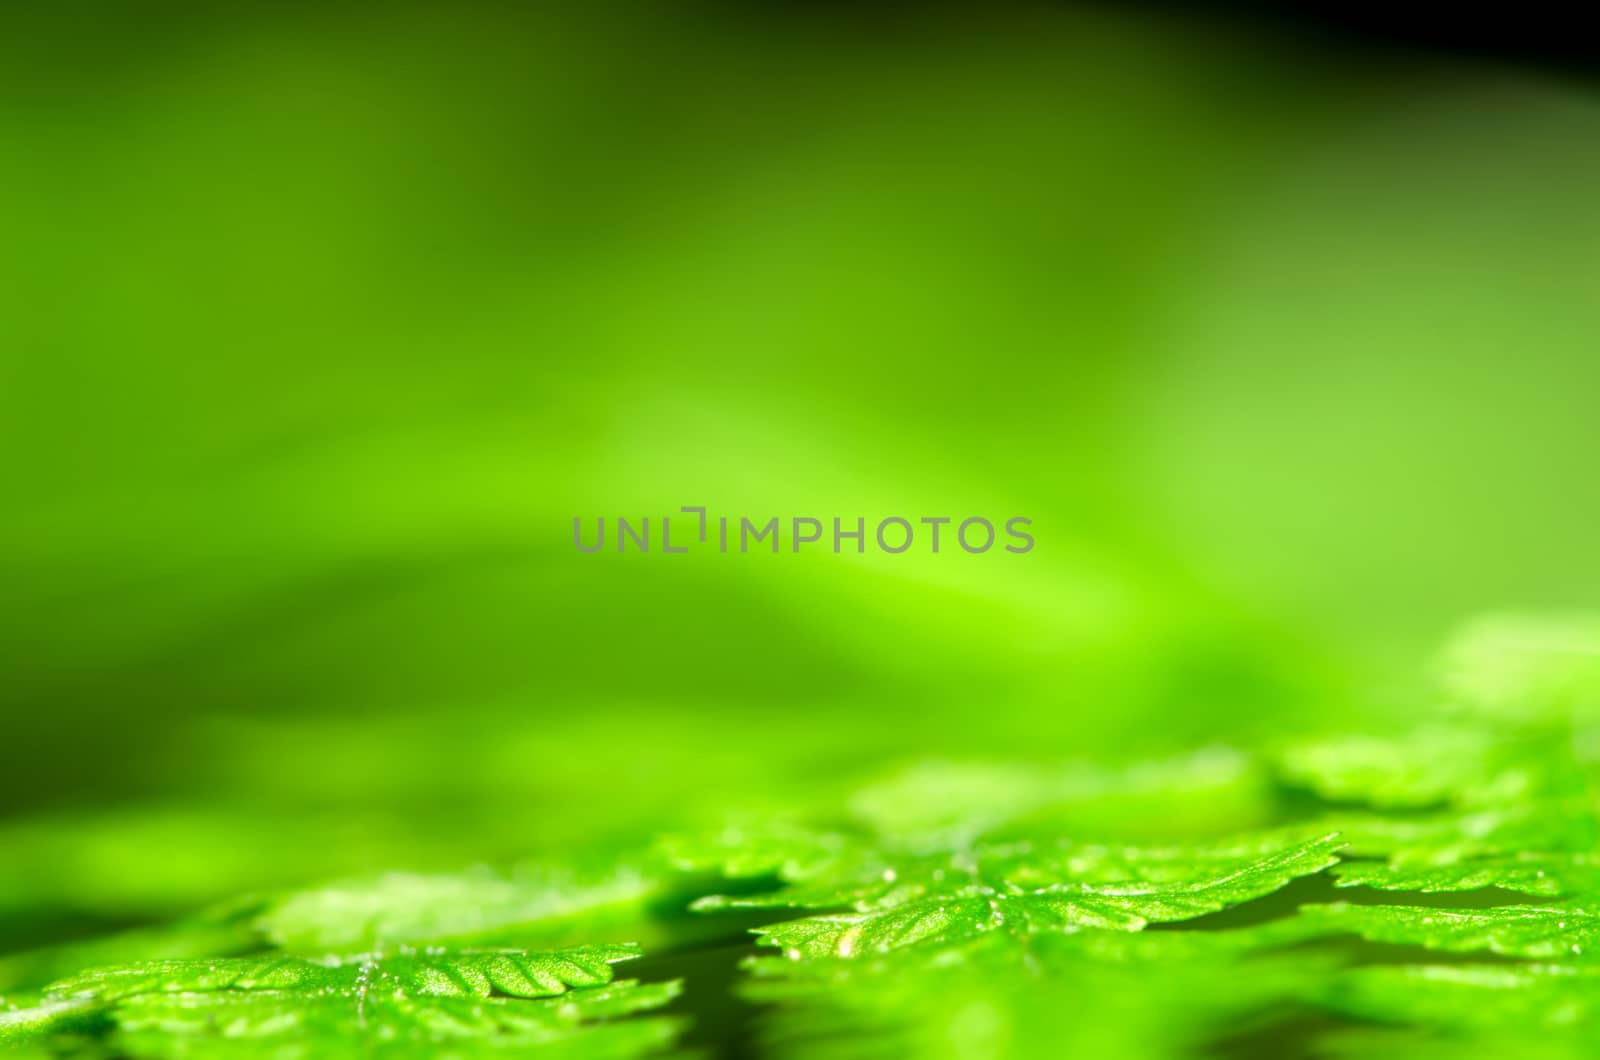 Detail of green fern leaf, blurred nature background.